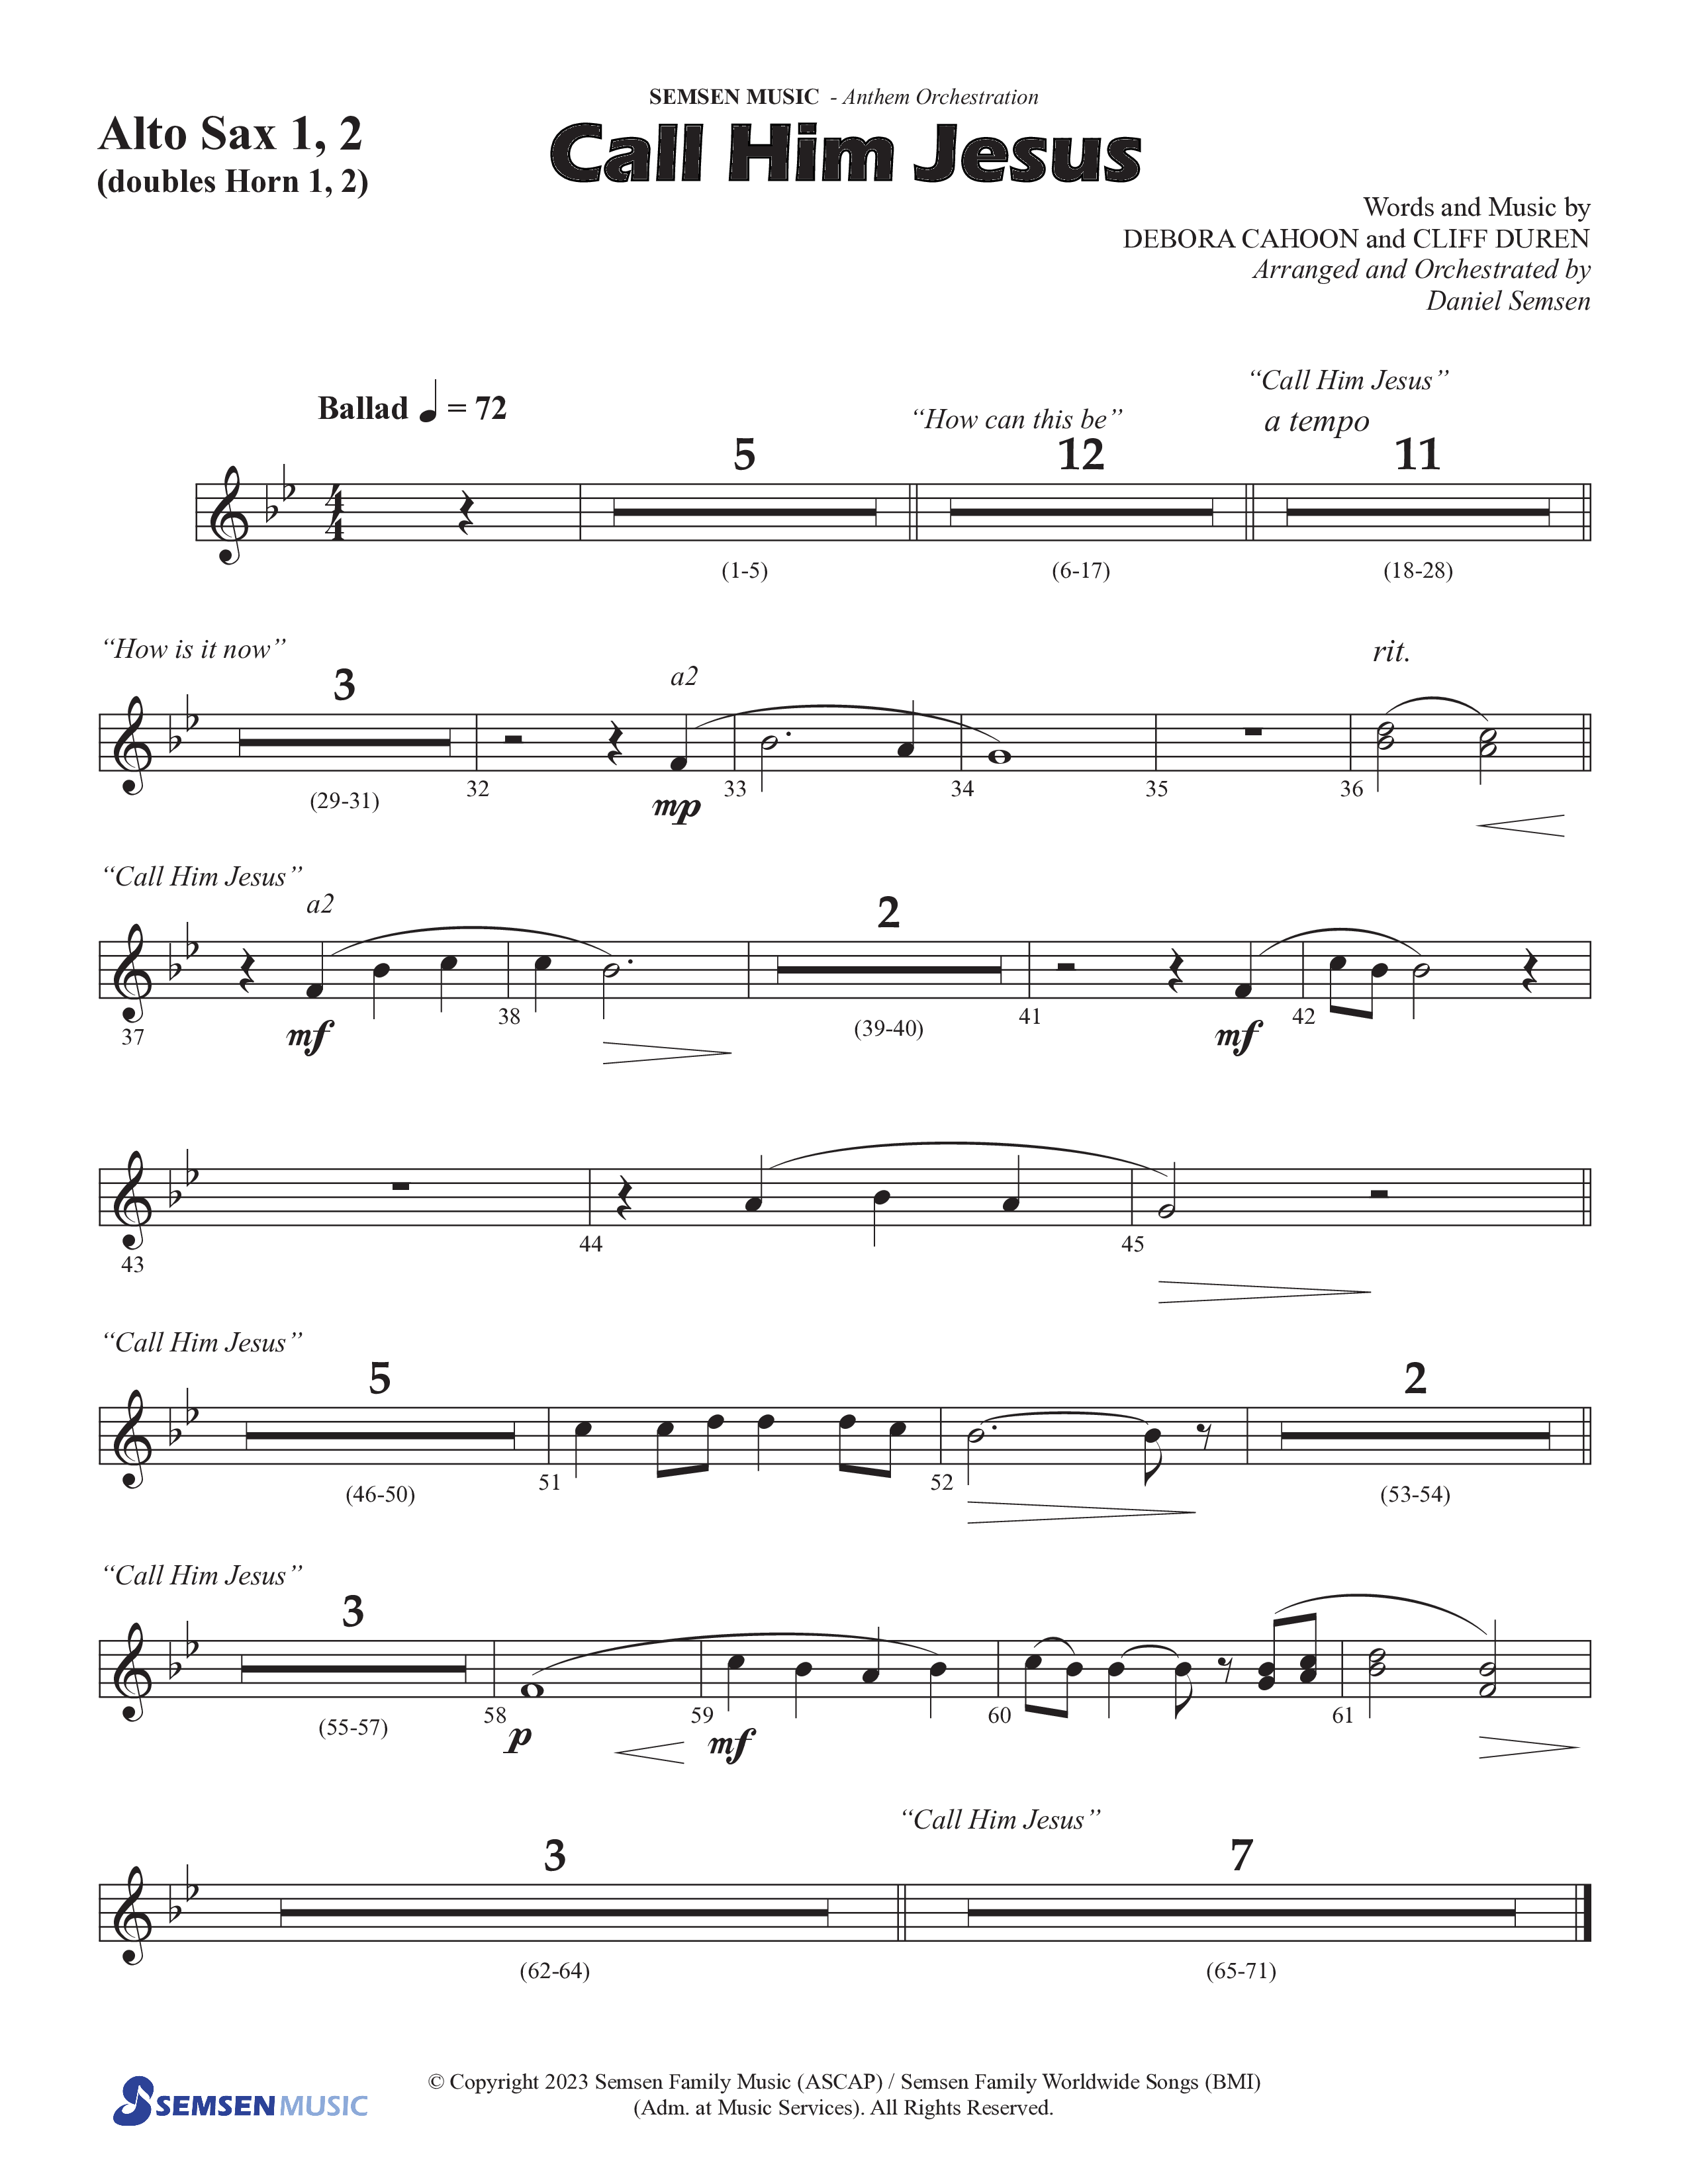 Call Him Jesus (Choral Anthem SATB) Alto Sax 1/2 (Semsen Music / Arr. Daniel Semsen)